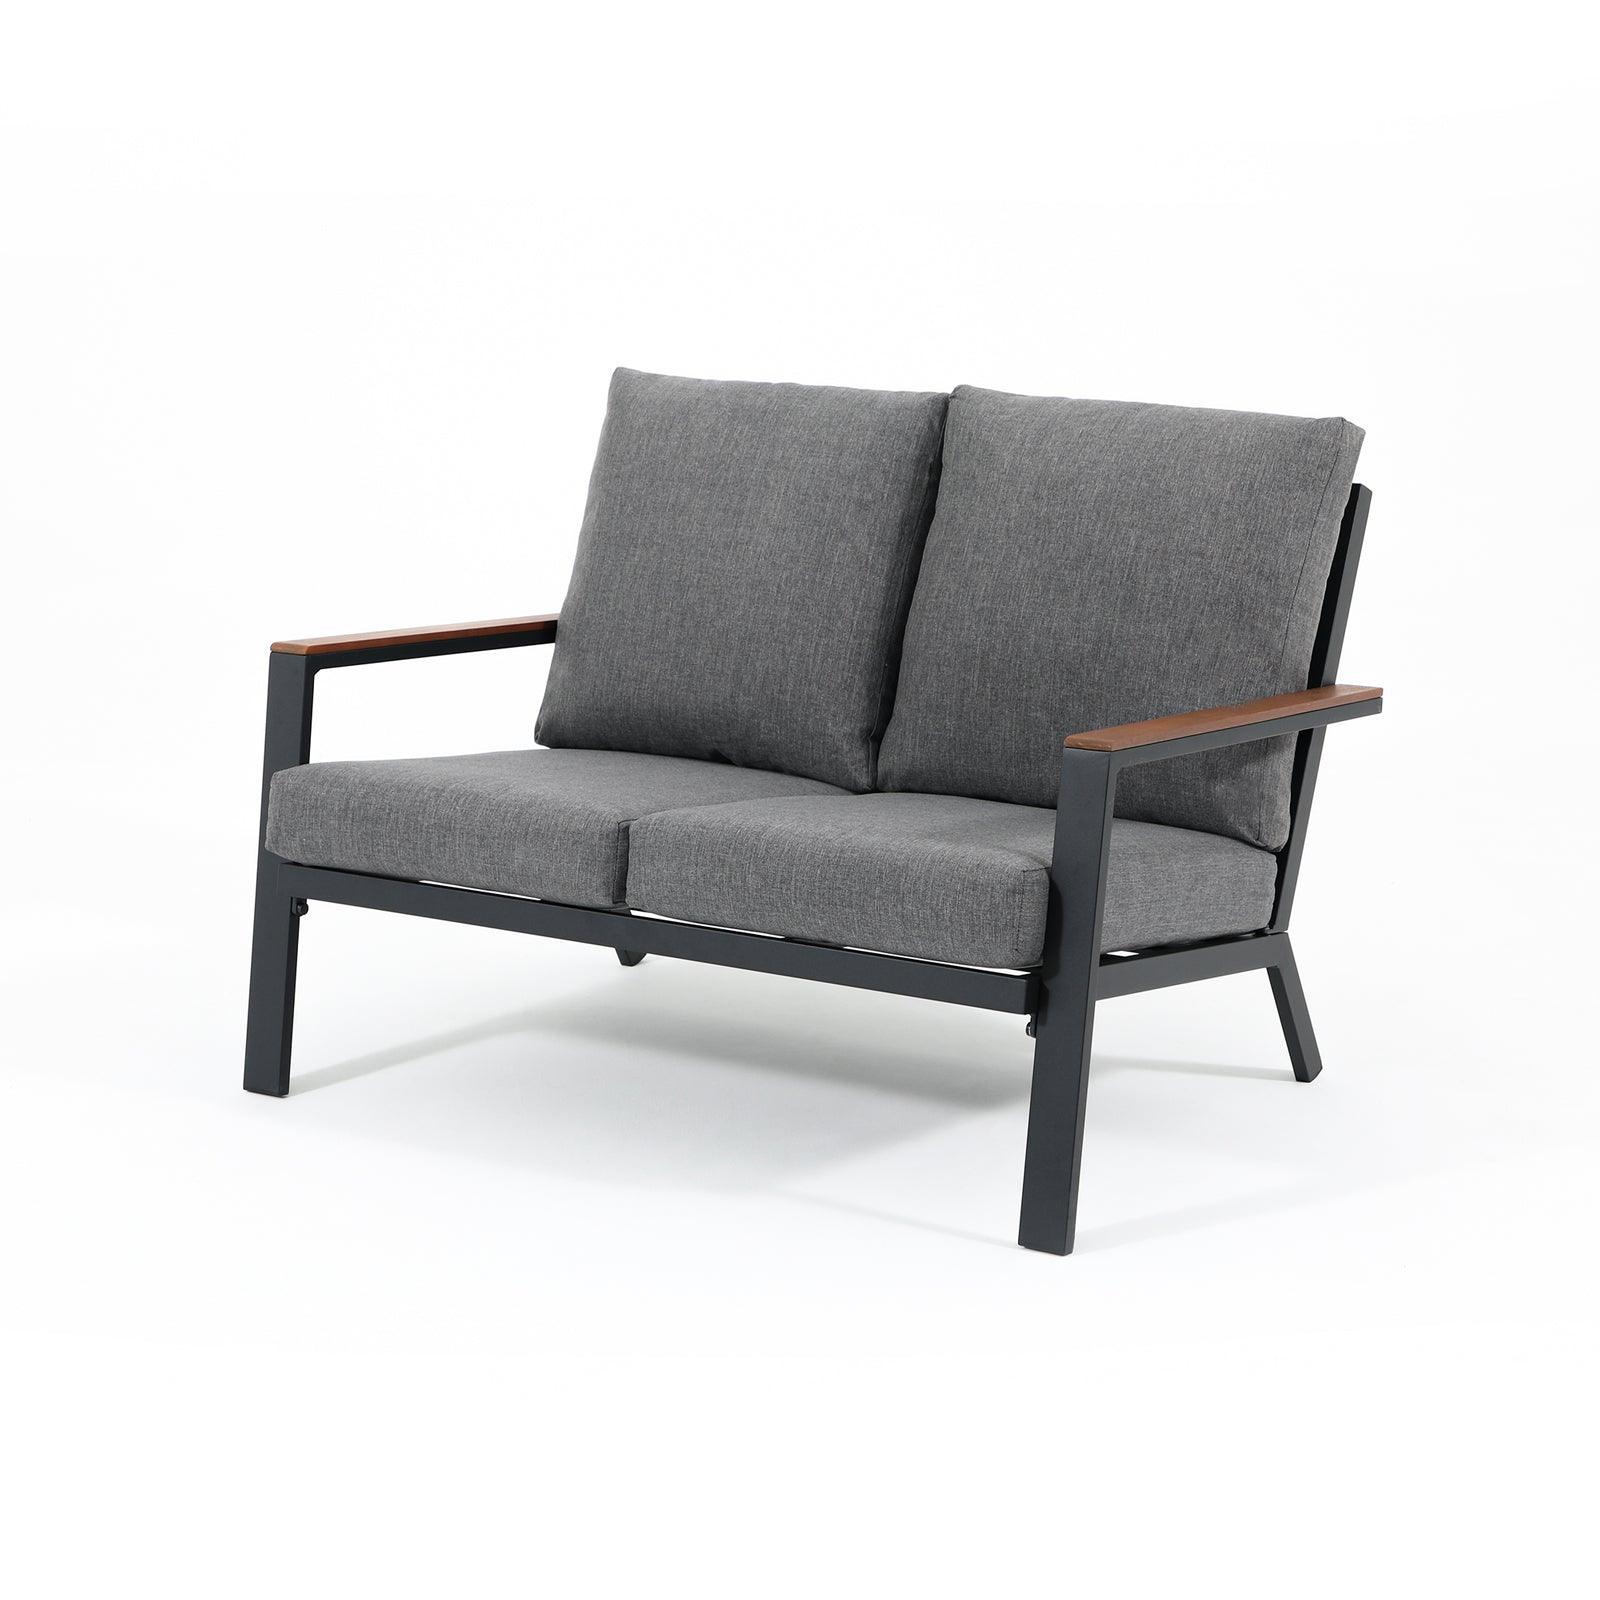 Ronda Modern Aluminum Frame Outdoor Furniture, Grey Outdoor Loveseat with grey cushions, wood finish armrest, Side View- Jardina Furniture